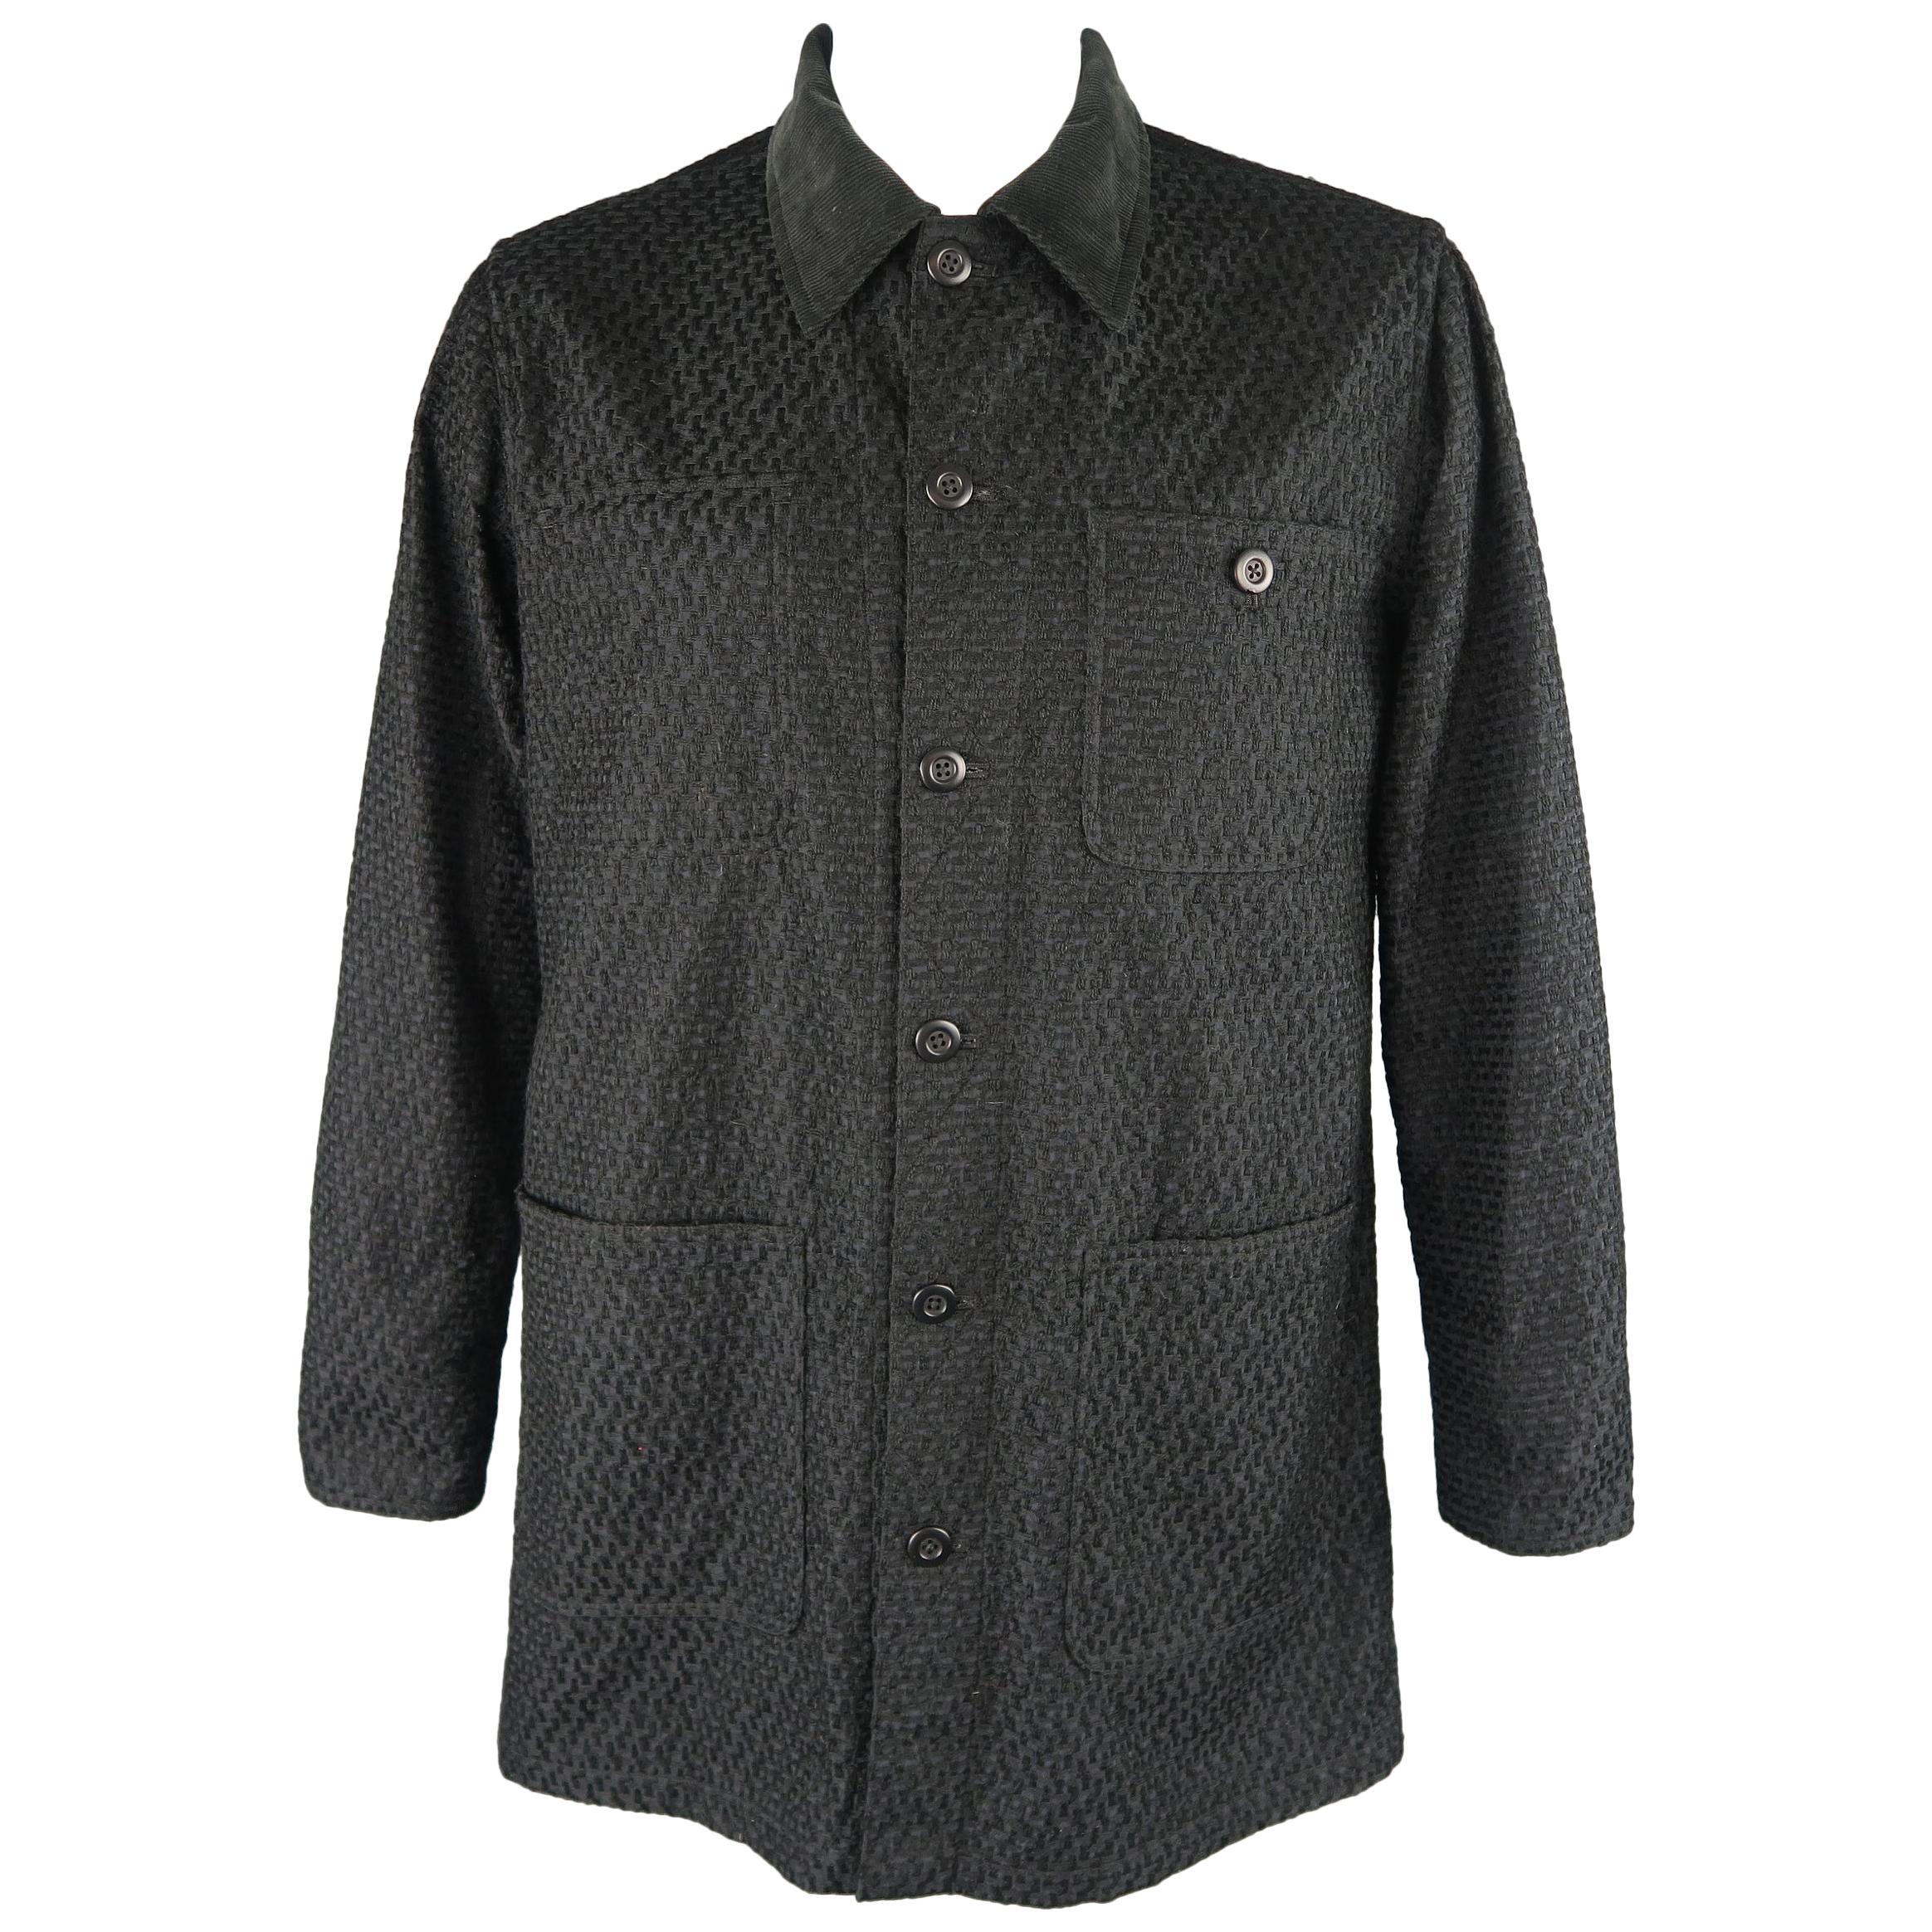 TS (S) L Black Wool Blend Woven Textured Corduroy Collar Jacket